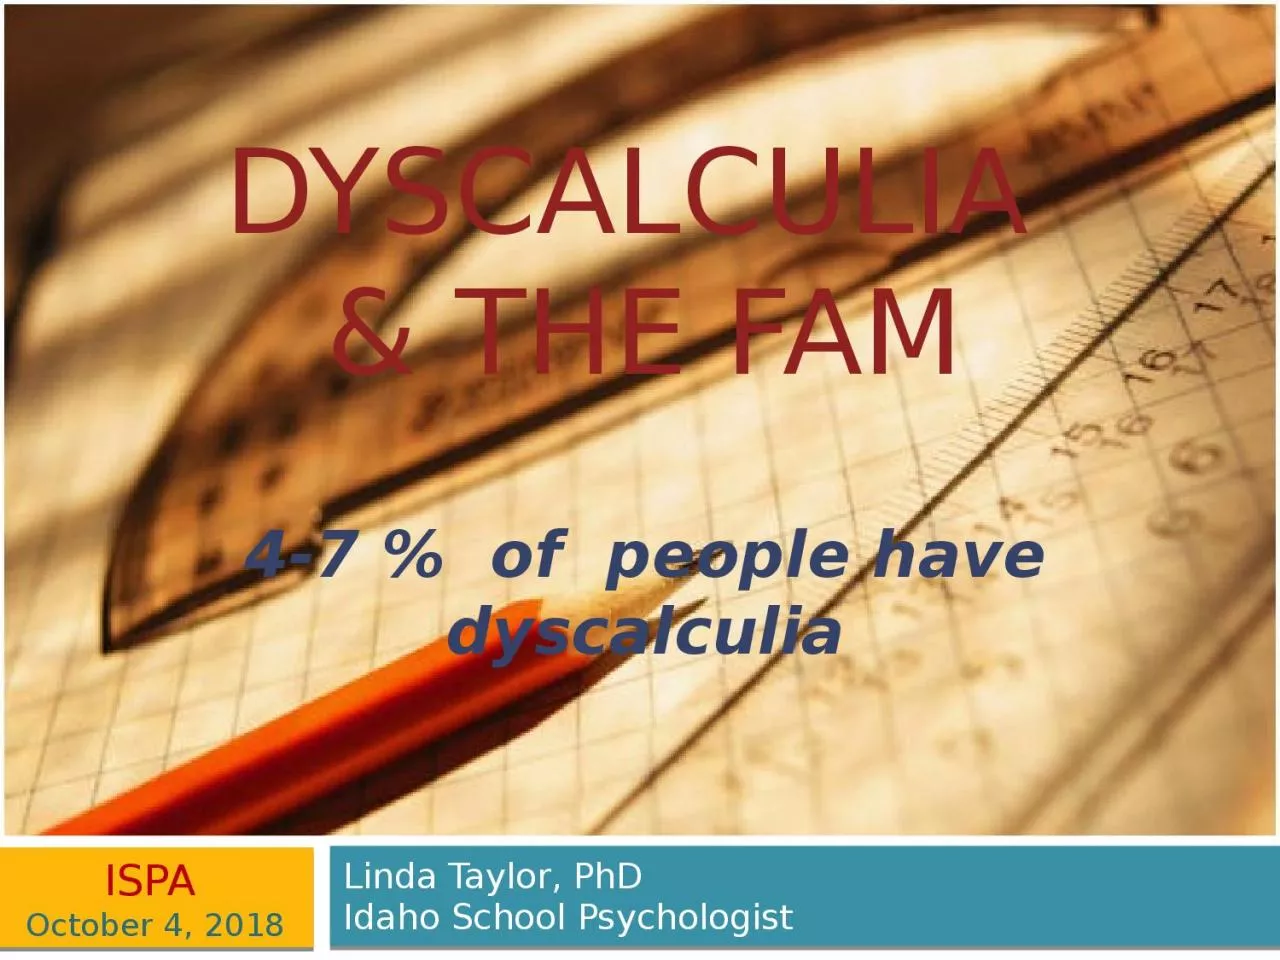 Dyscalculia  & the FAM